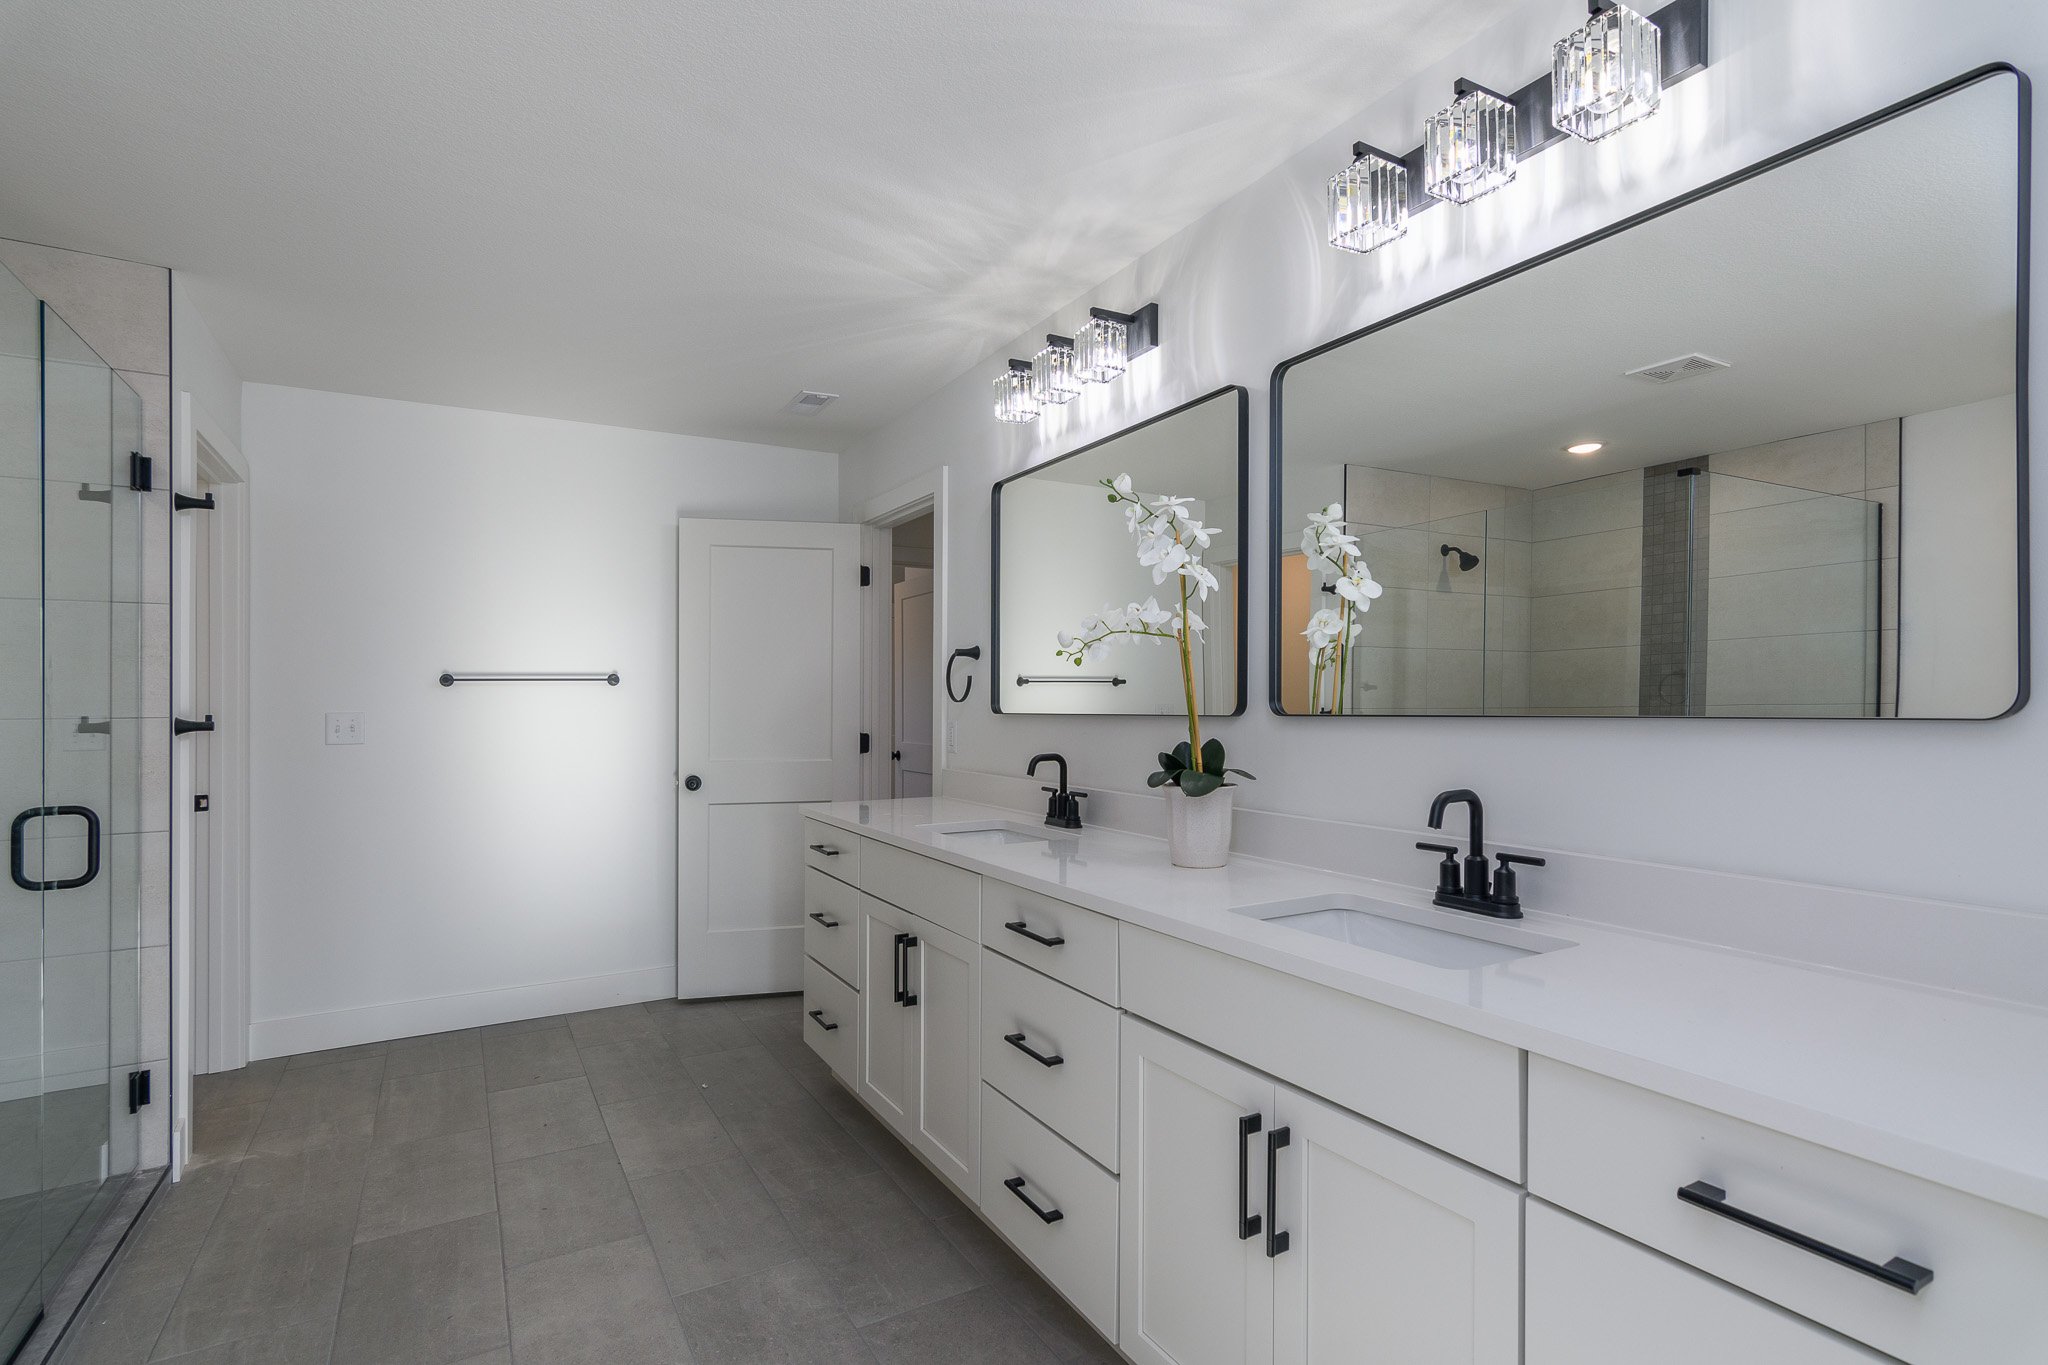 MAster bathroom with large double vanity - new home for sale - wooldridge mo.jpg